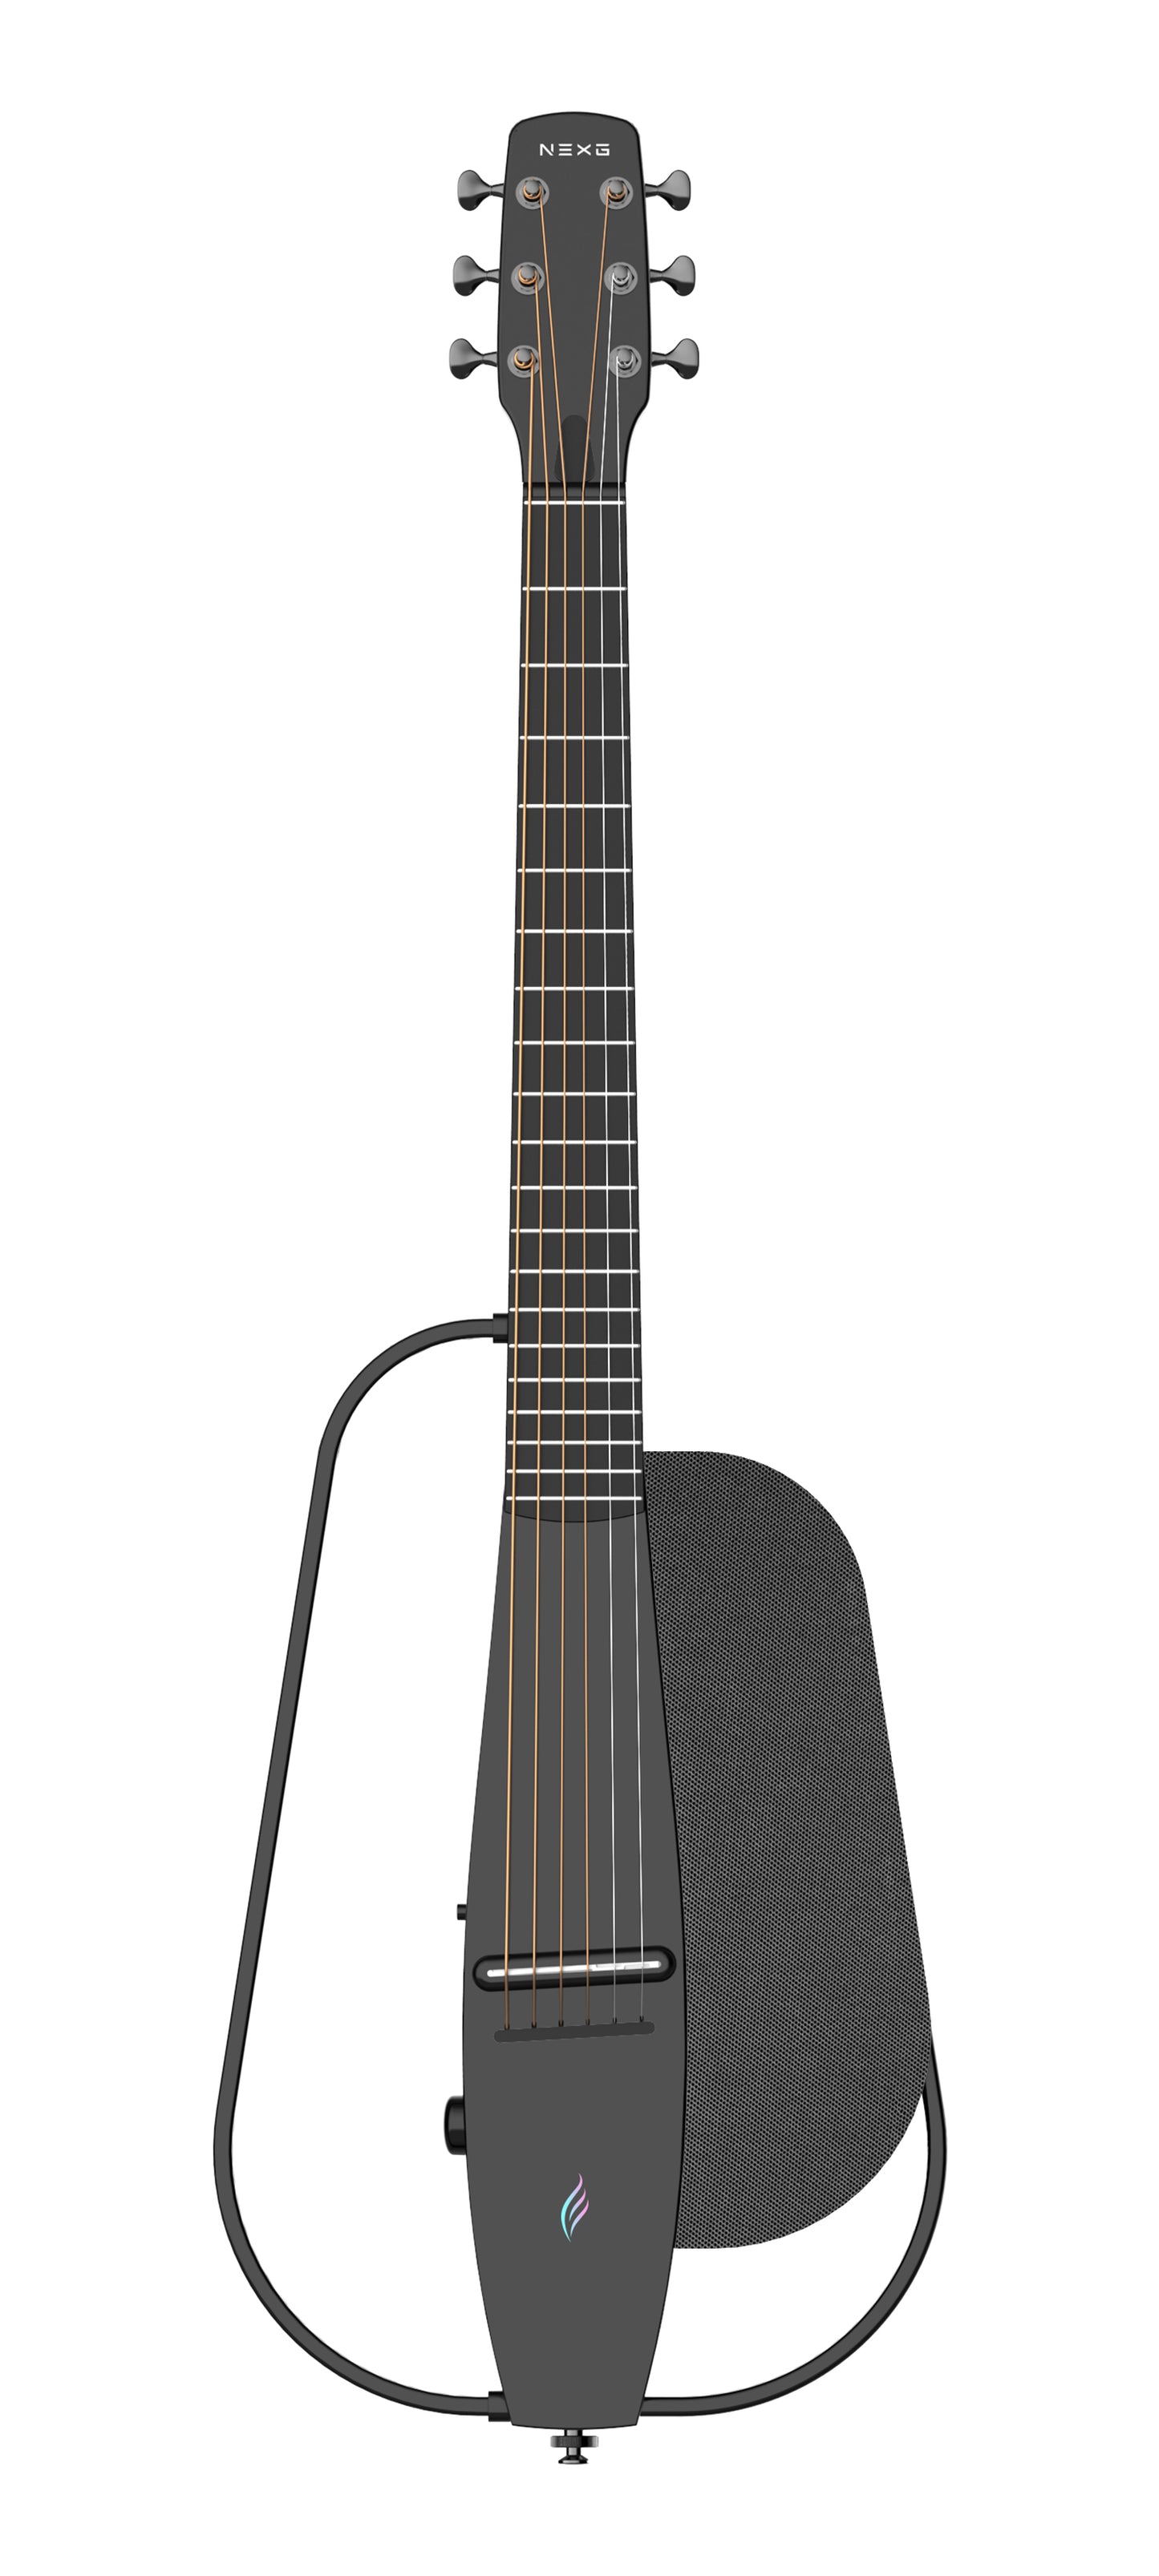 NEXG Smart Electric Guitar, First Generation (Demo Stock)